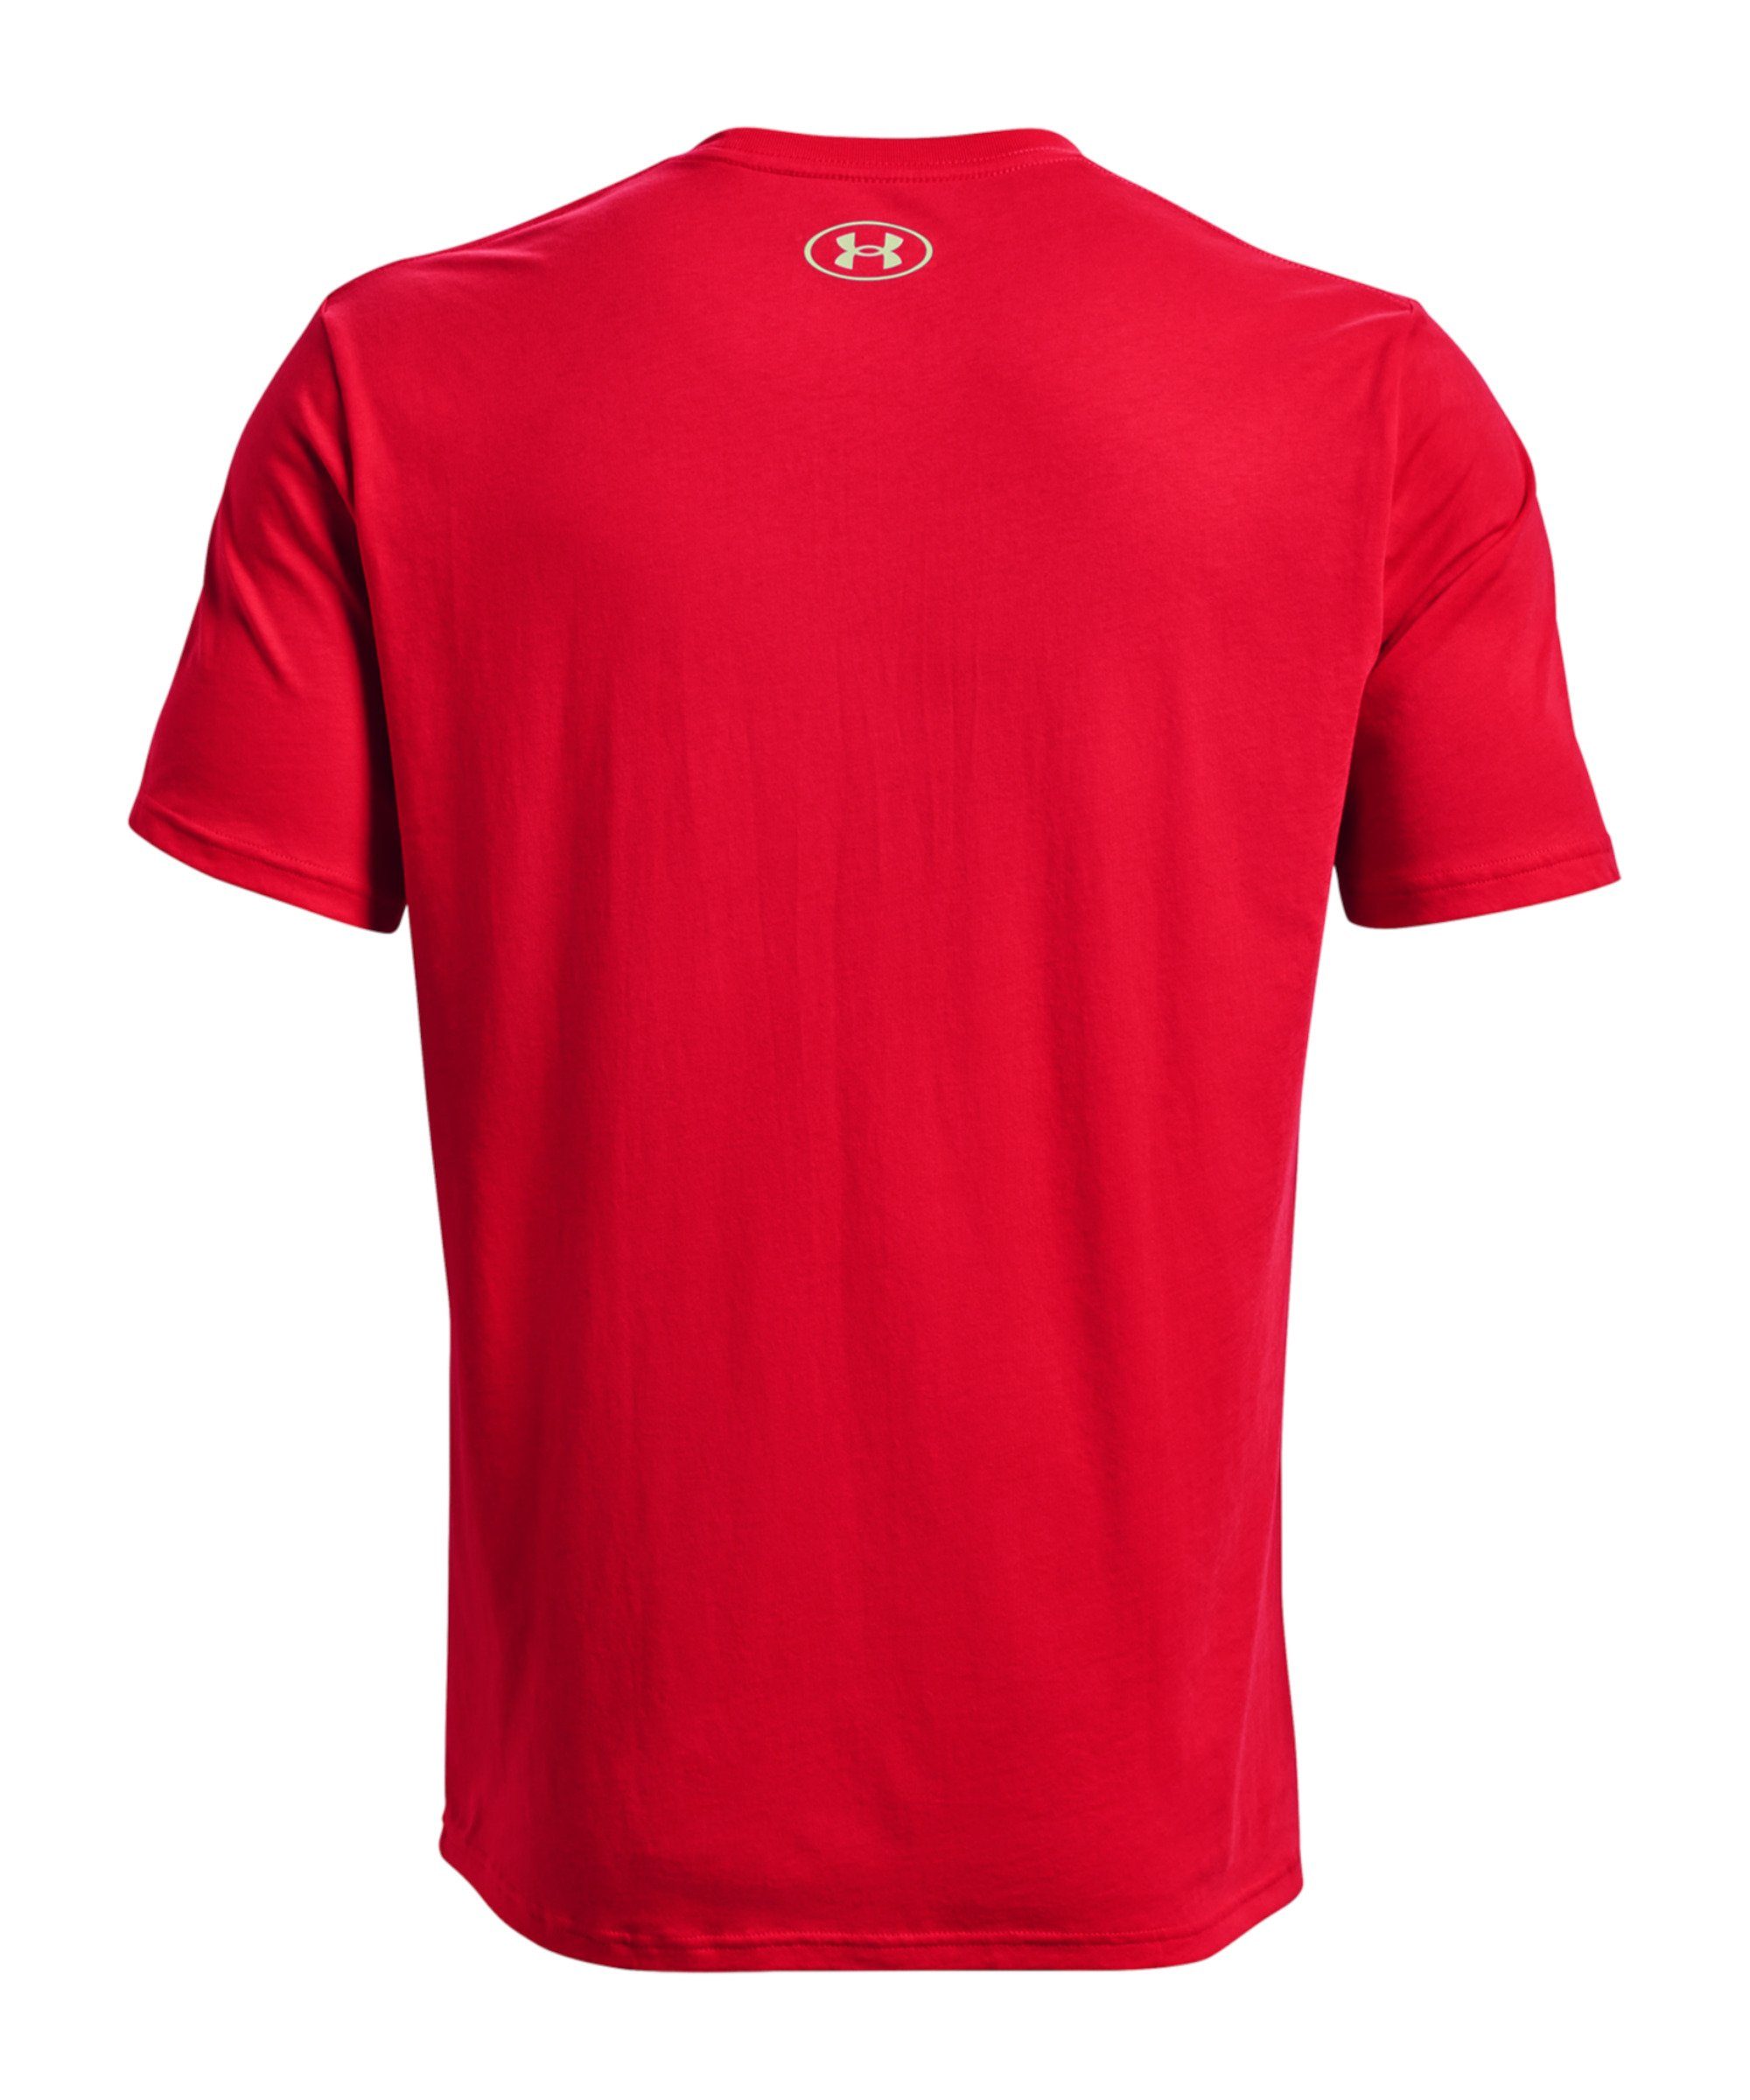 Team Wordmark T-Shirt Under default Issue T-Shirt Armour® rot